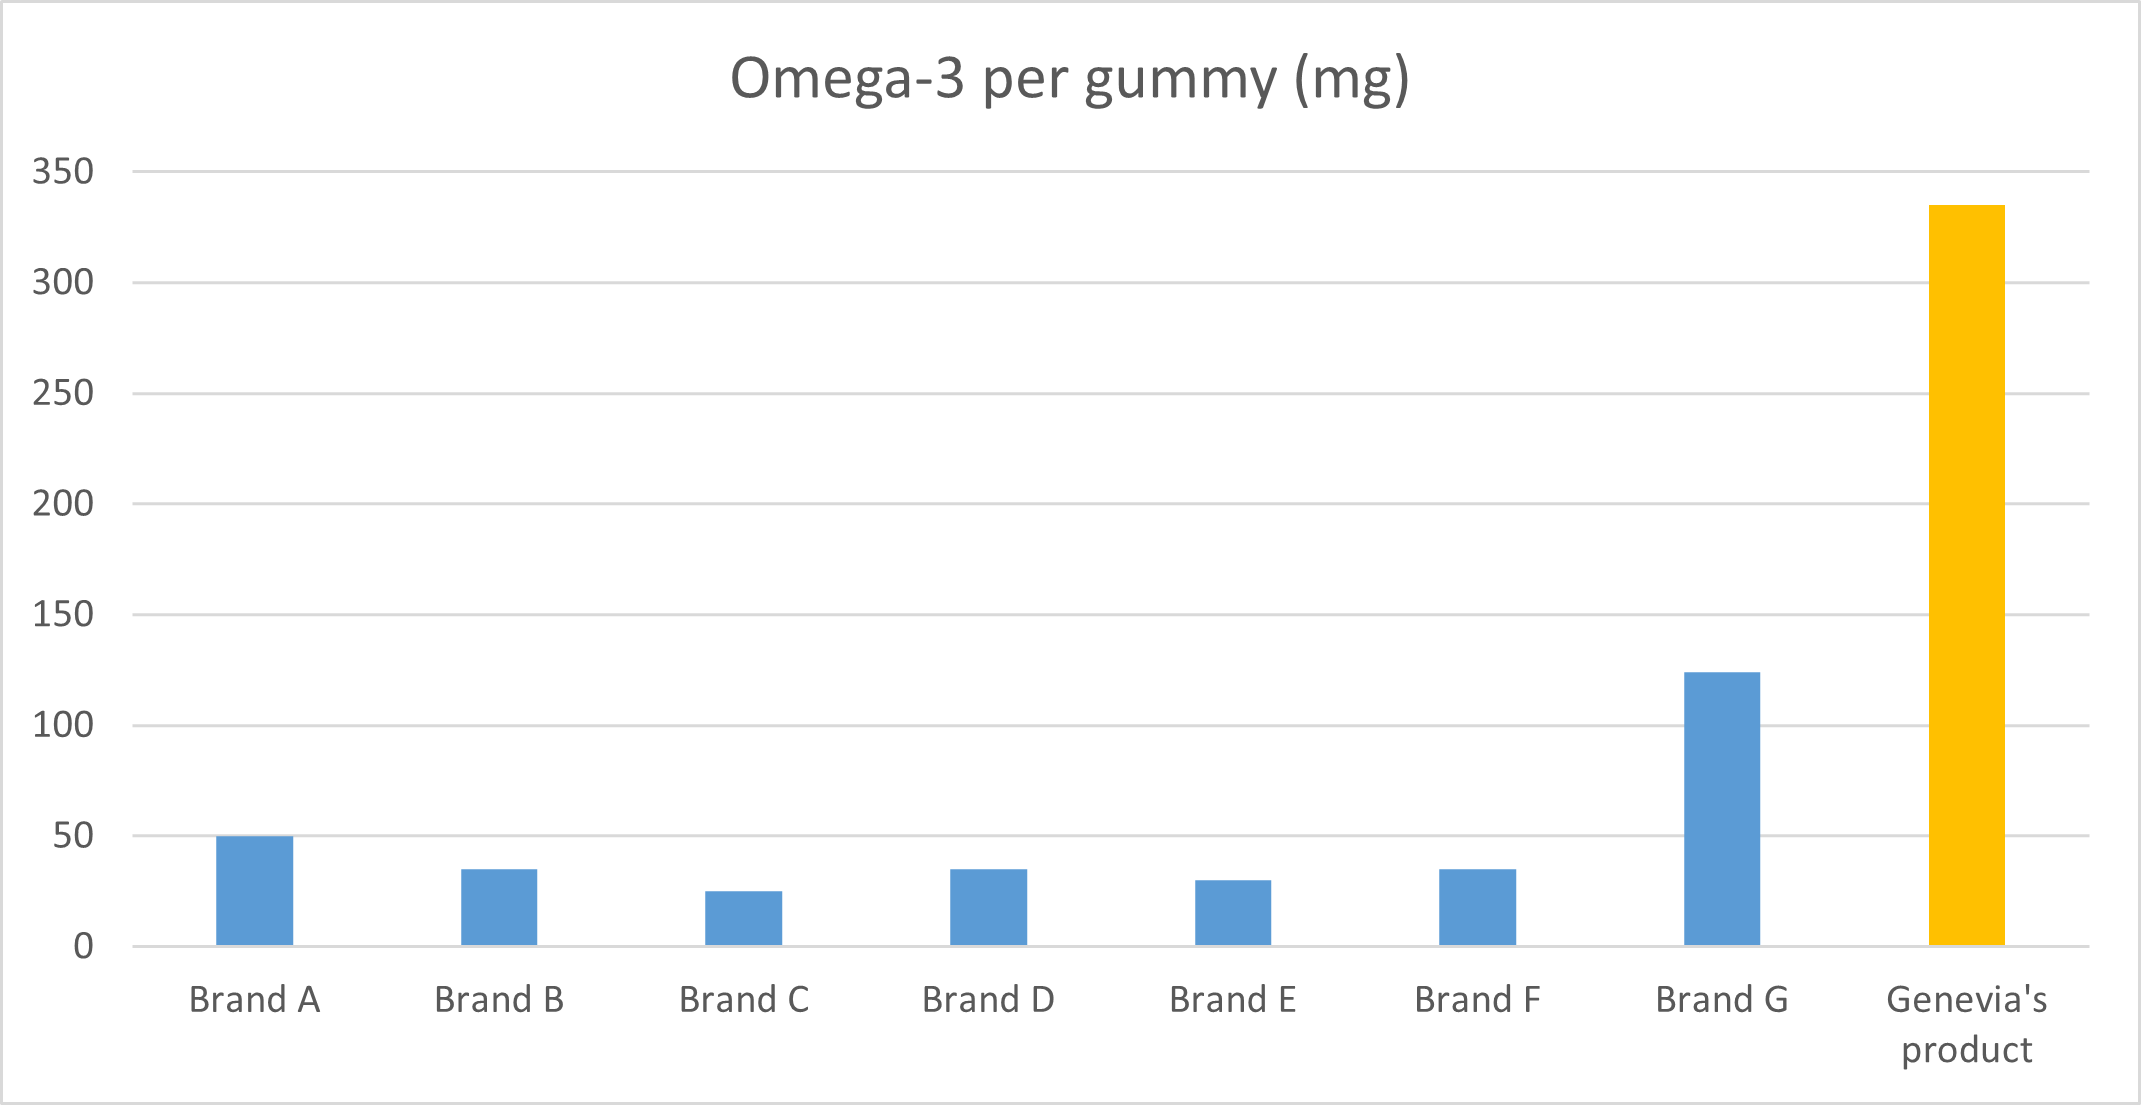 Figure 2: Omega-3 content of kids’ omega-3 multivitamins per gummy/chew